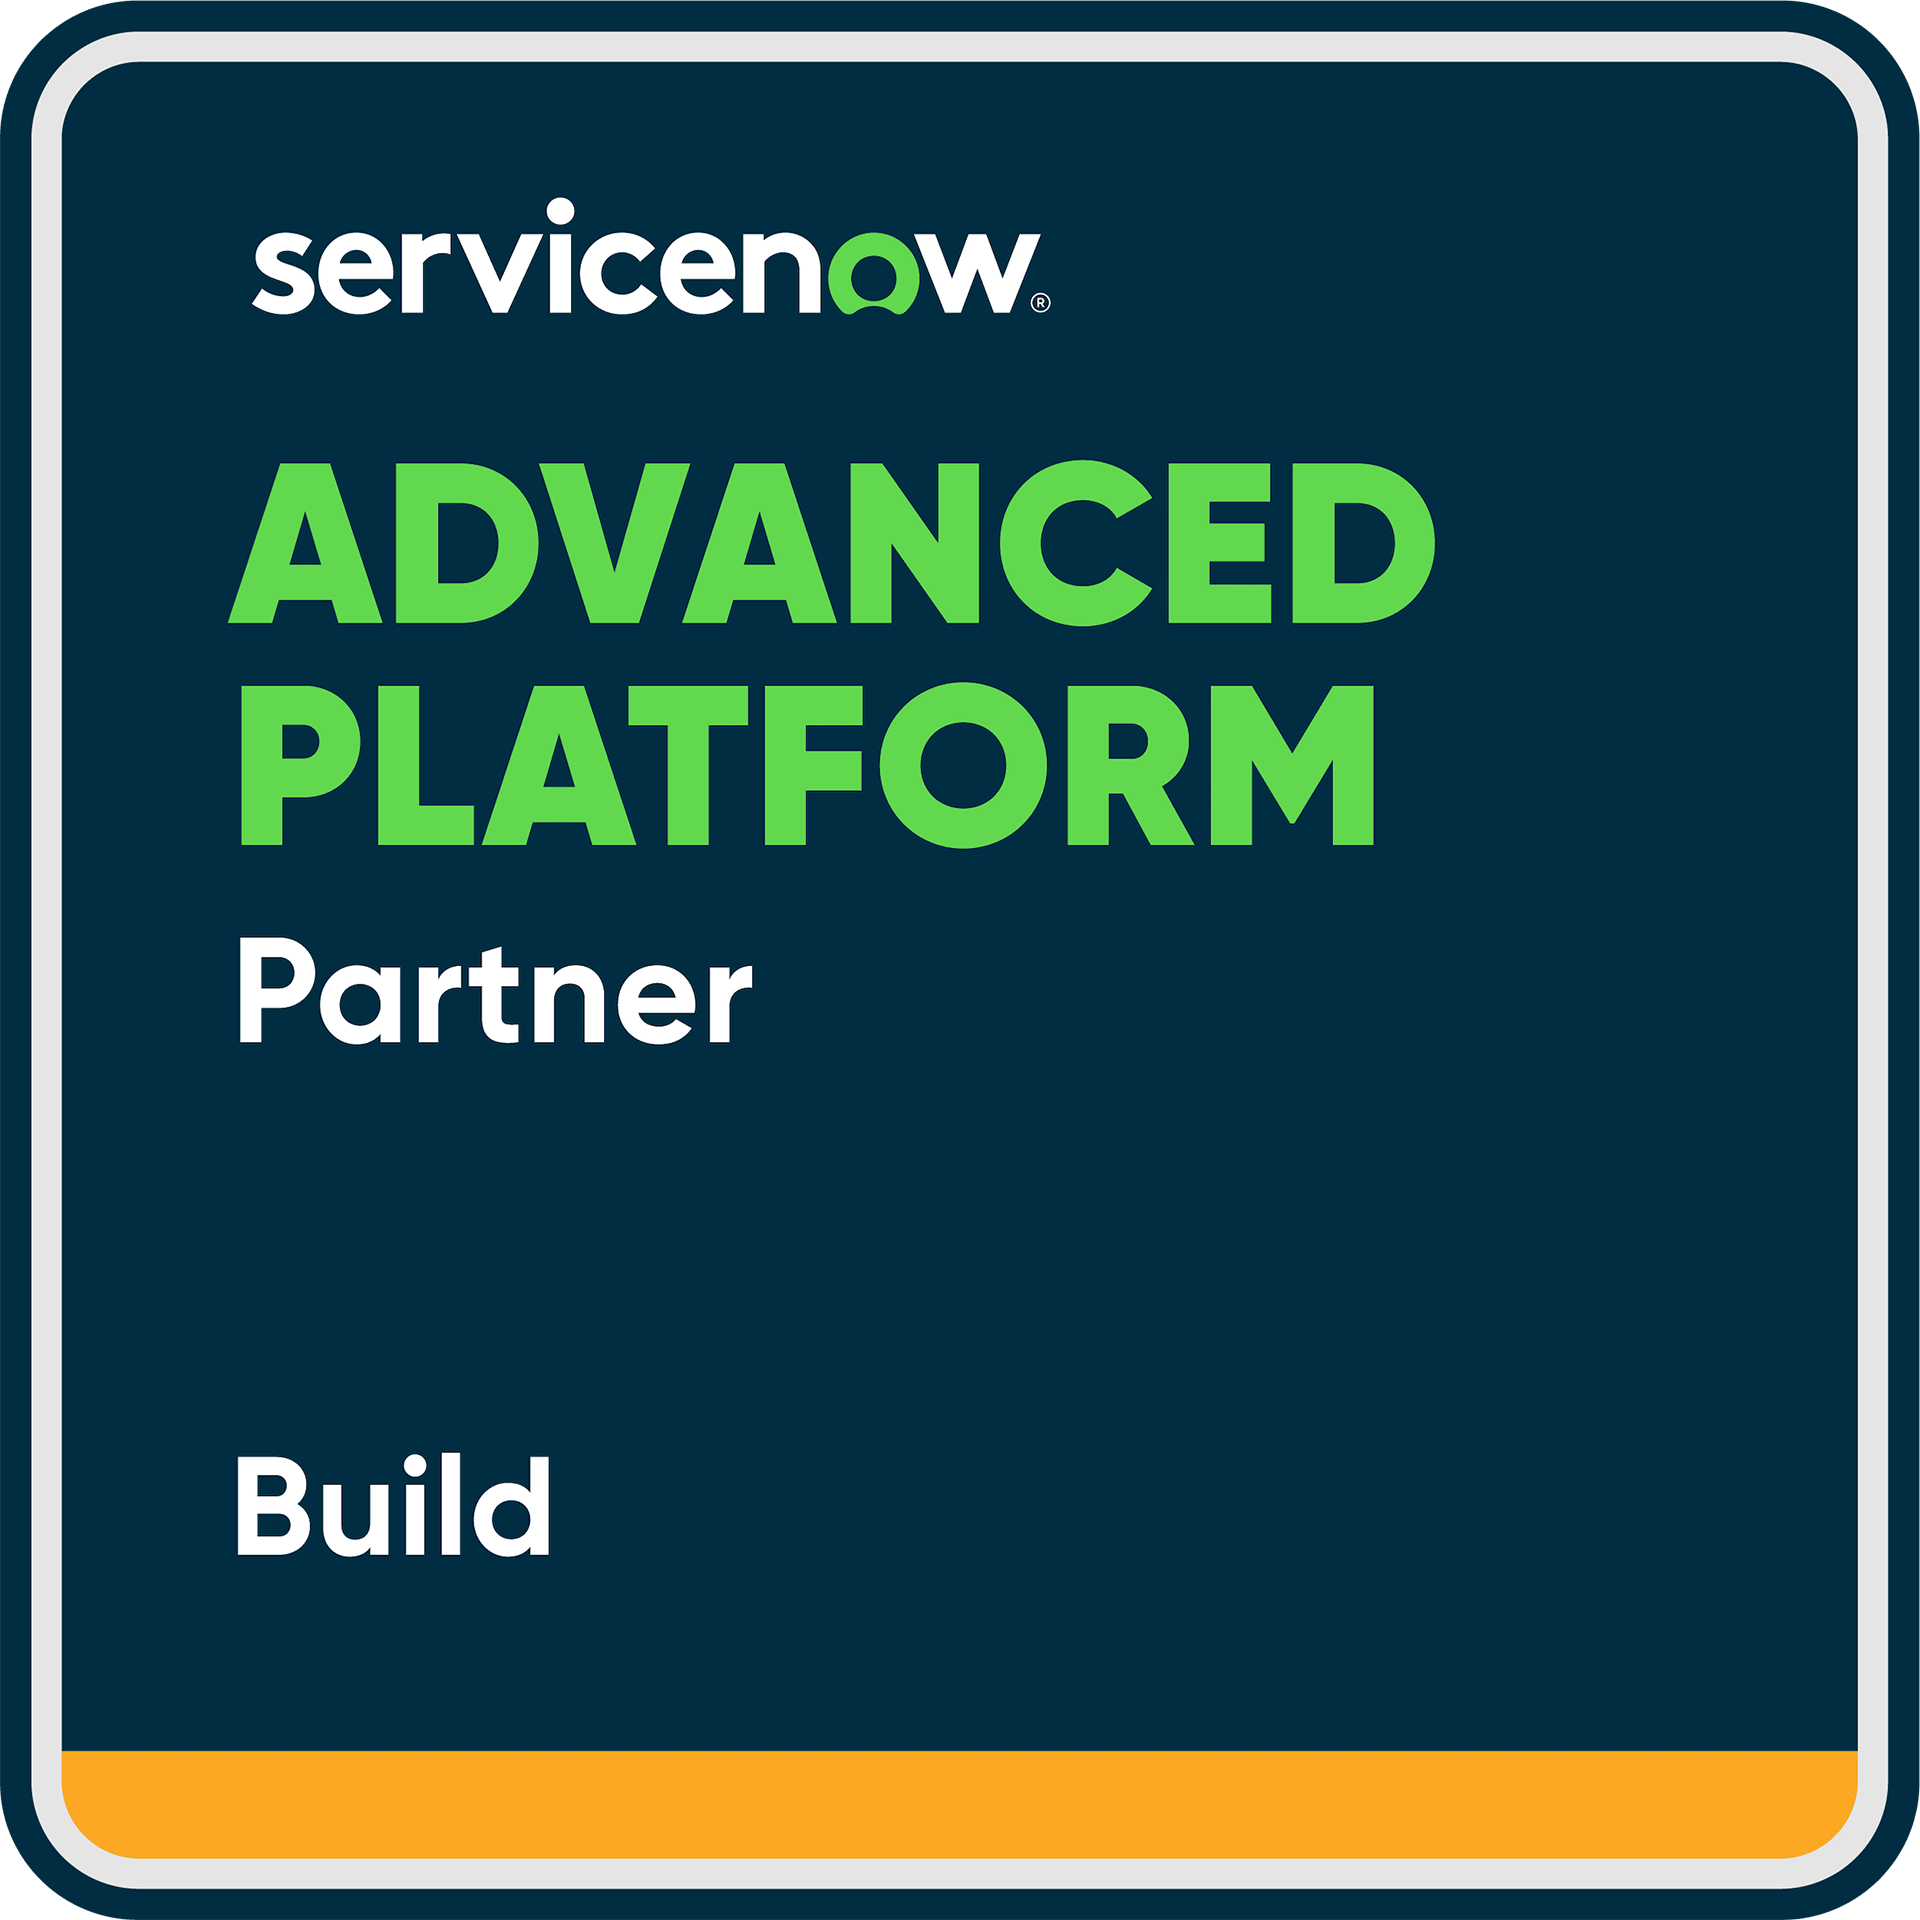 ServiceNow Advanced Platform Partner Build logo